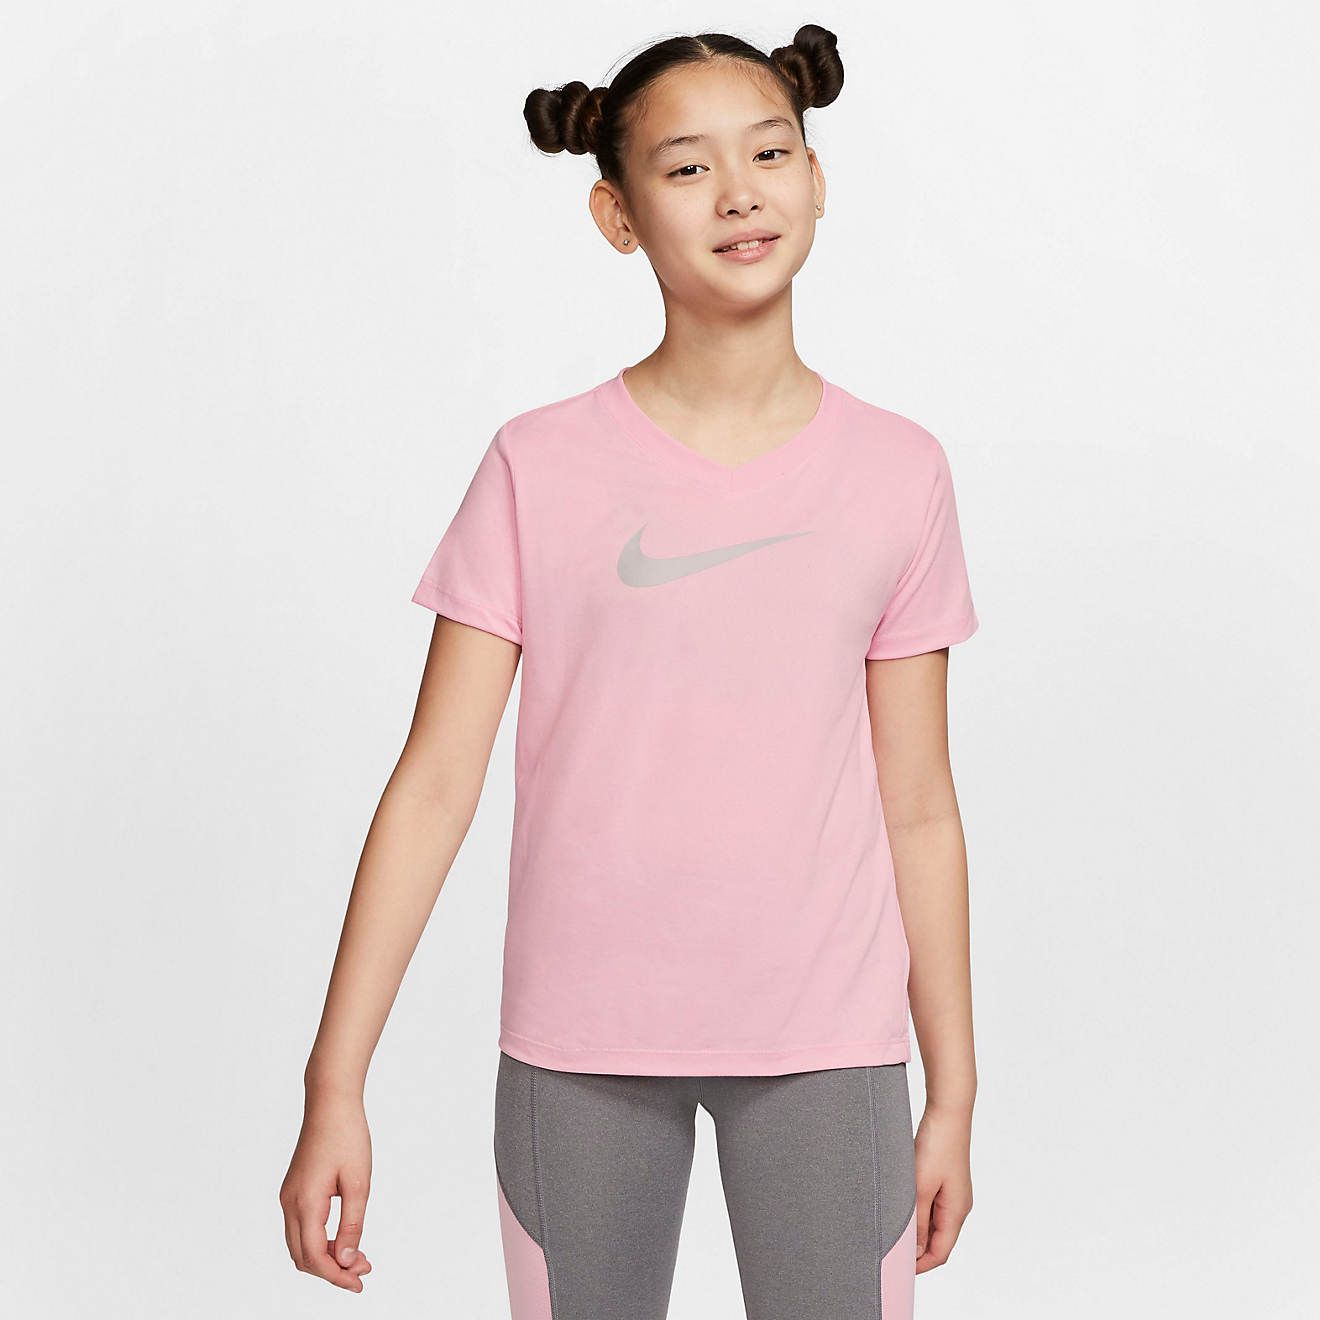 Nike Girls' Swoosh Dri-FIT T-shirt | Academy Sports + Outdoor Affiliate